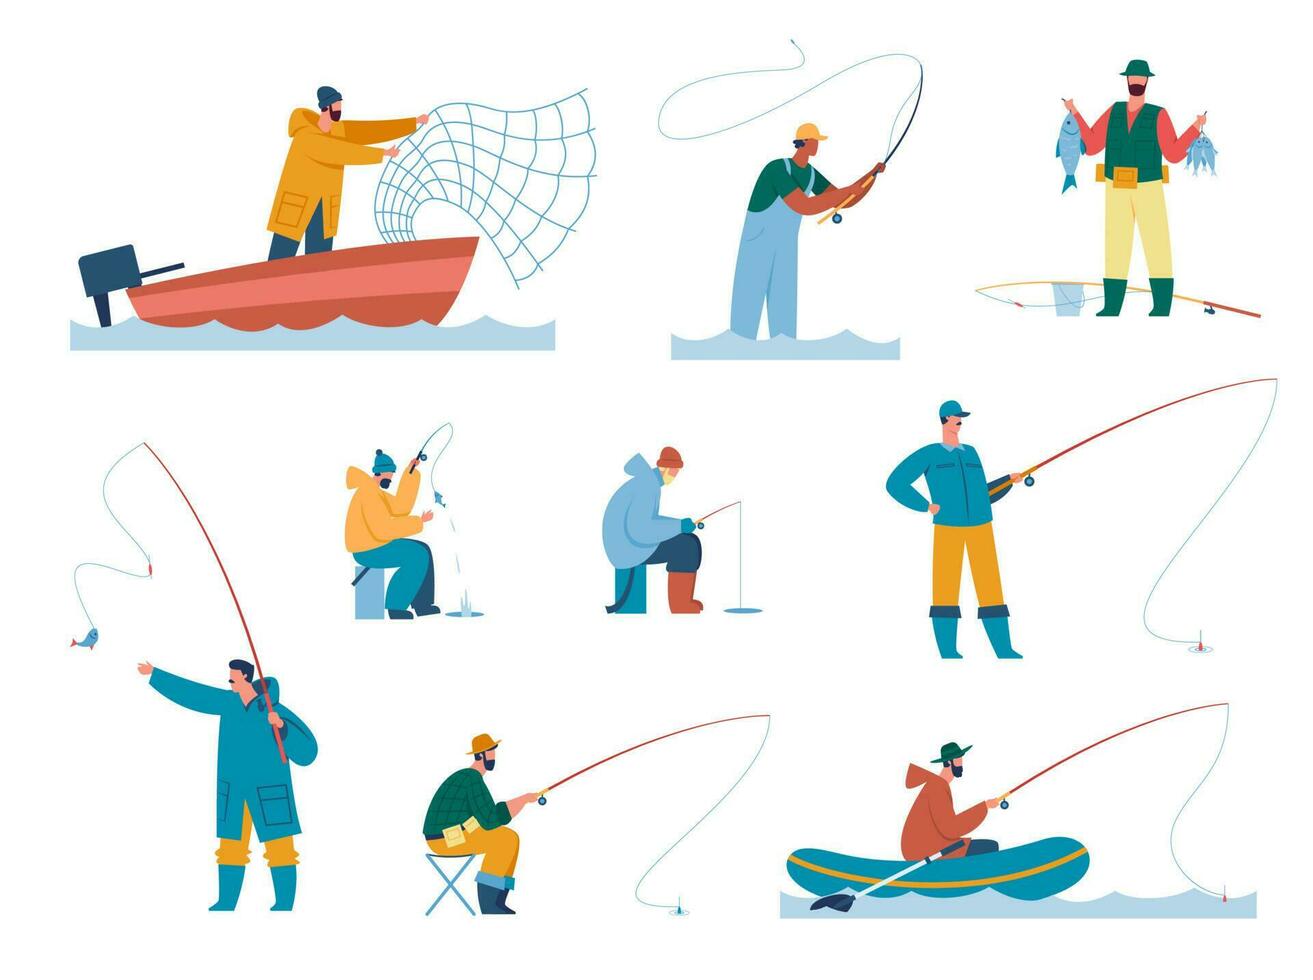 personas pescar con varilla en lago, pescador atrapando pescado con neto. pescador caracteres, pescadores hielo pesca, verano ocio actividad vector conjunto